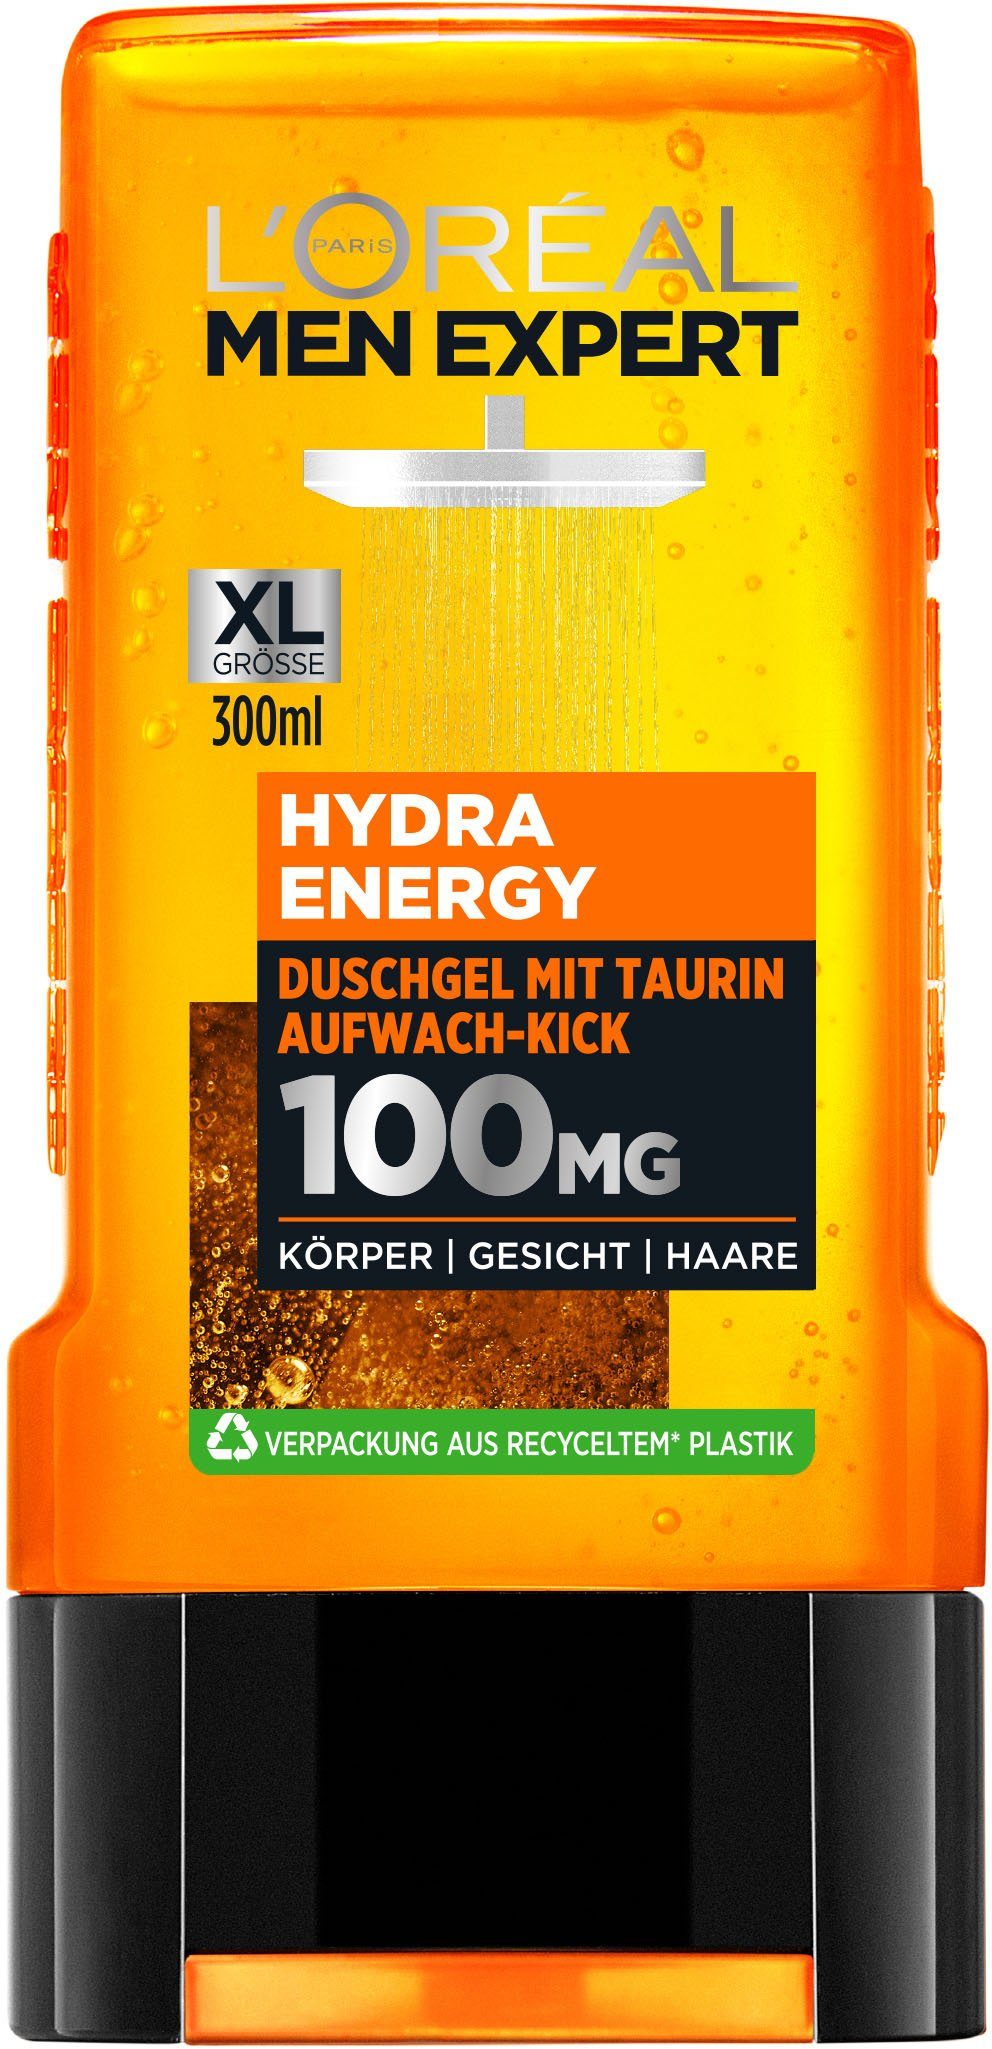 EXPERT Hydra Taurin, MEN Energy PARIS Duschgel 6-tlg. L'ORÉAL